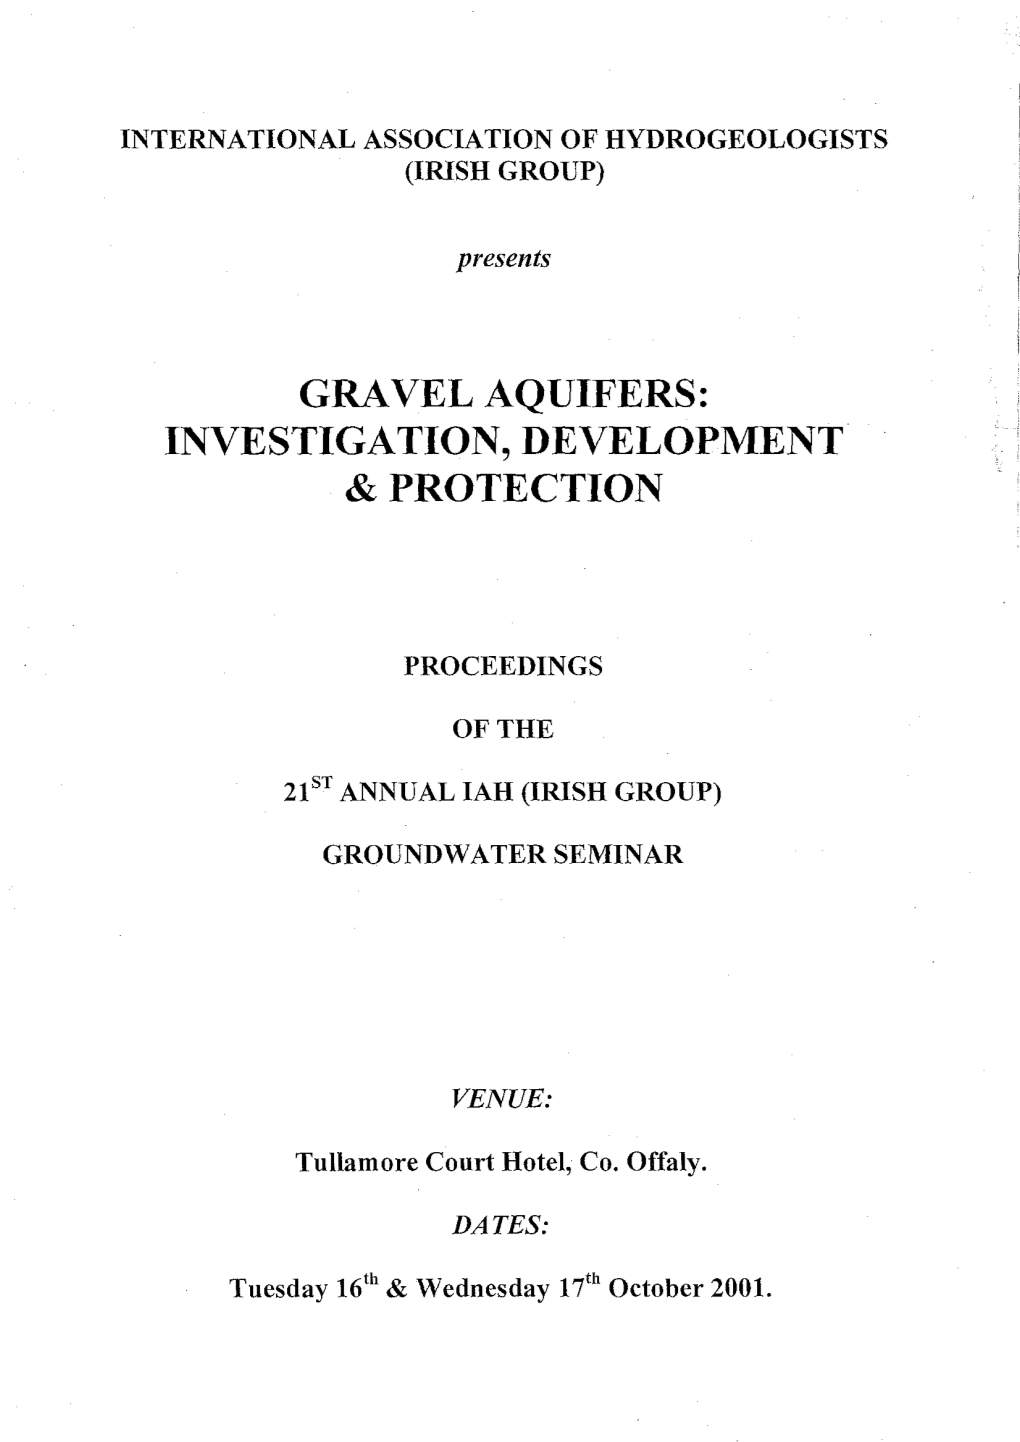 Gravel Aquifers: Investigation, Development & Protection